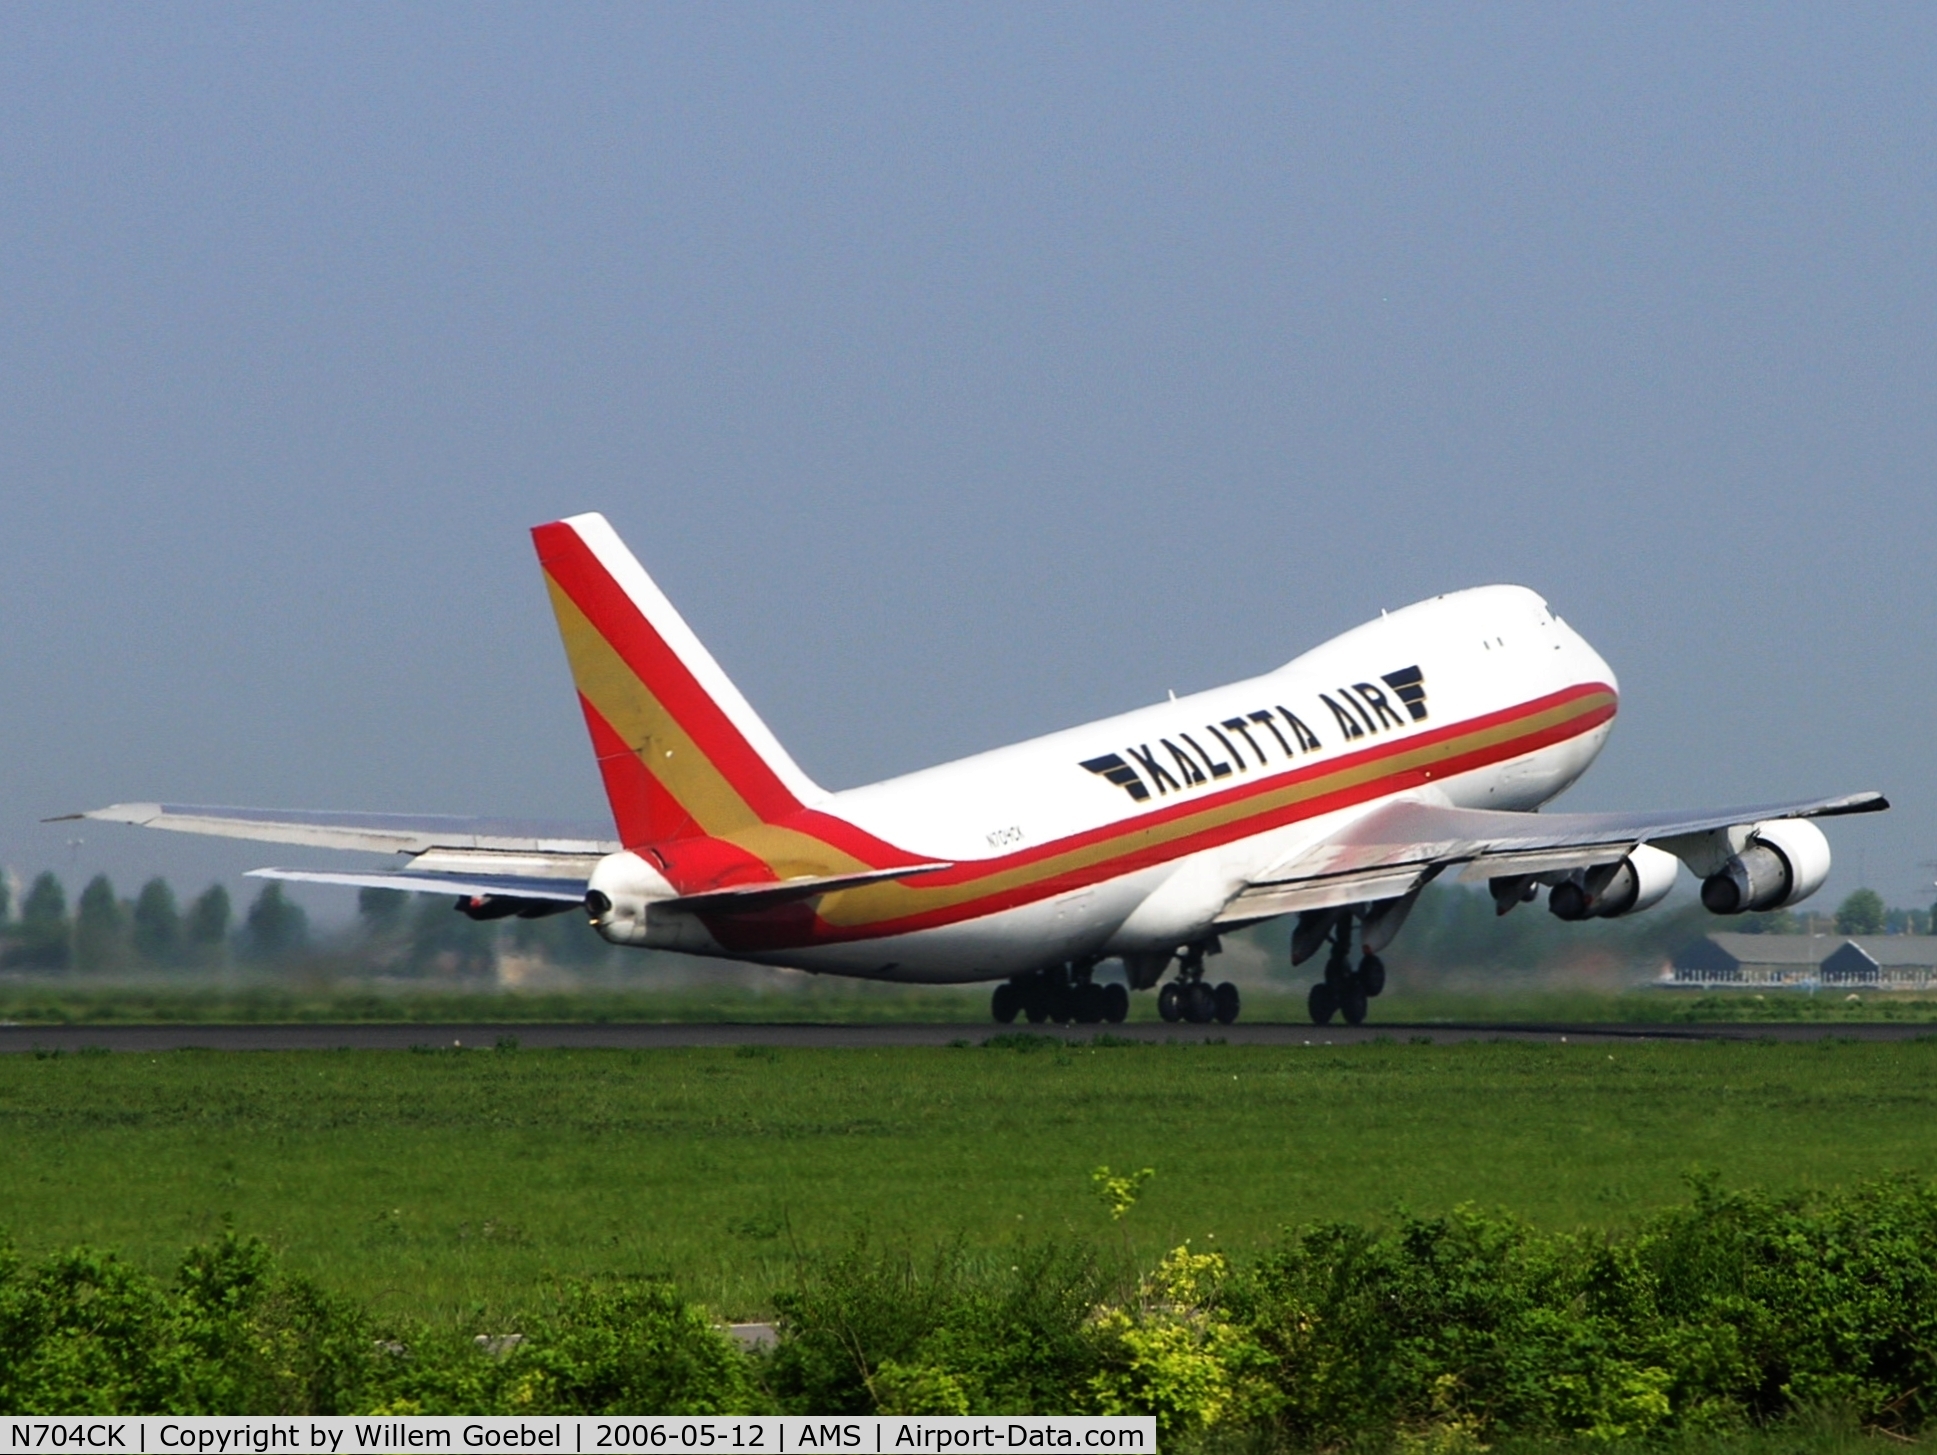 N704CK, 1980 Boeing 747-209F C/N 22299, Take off of the 